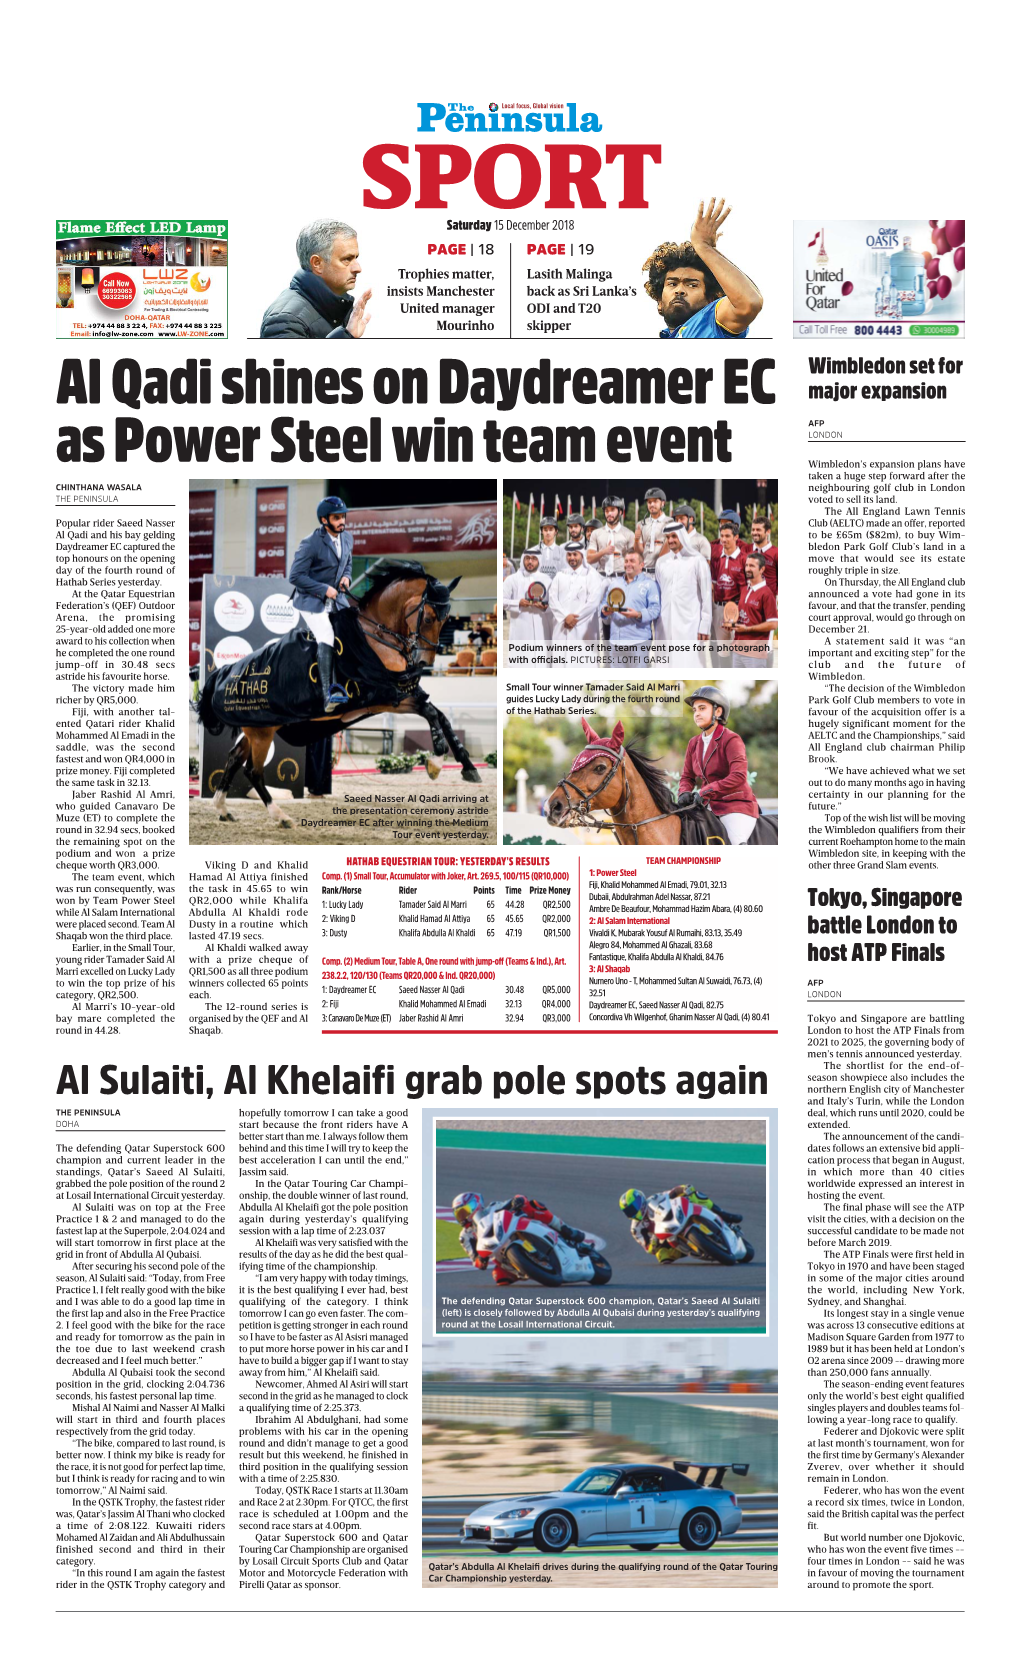 Al Qadi Shines on Daydreamer EC As Power Steel Win Team Event